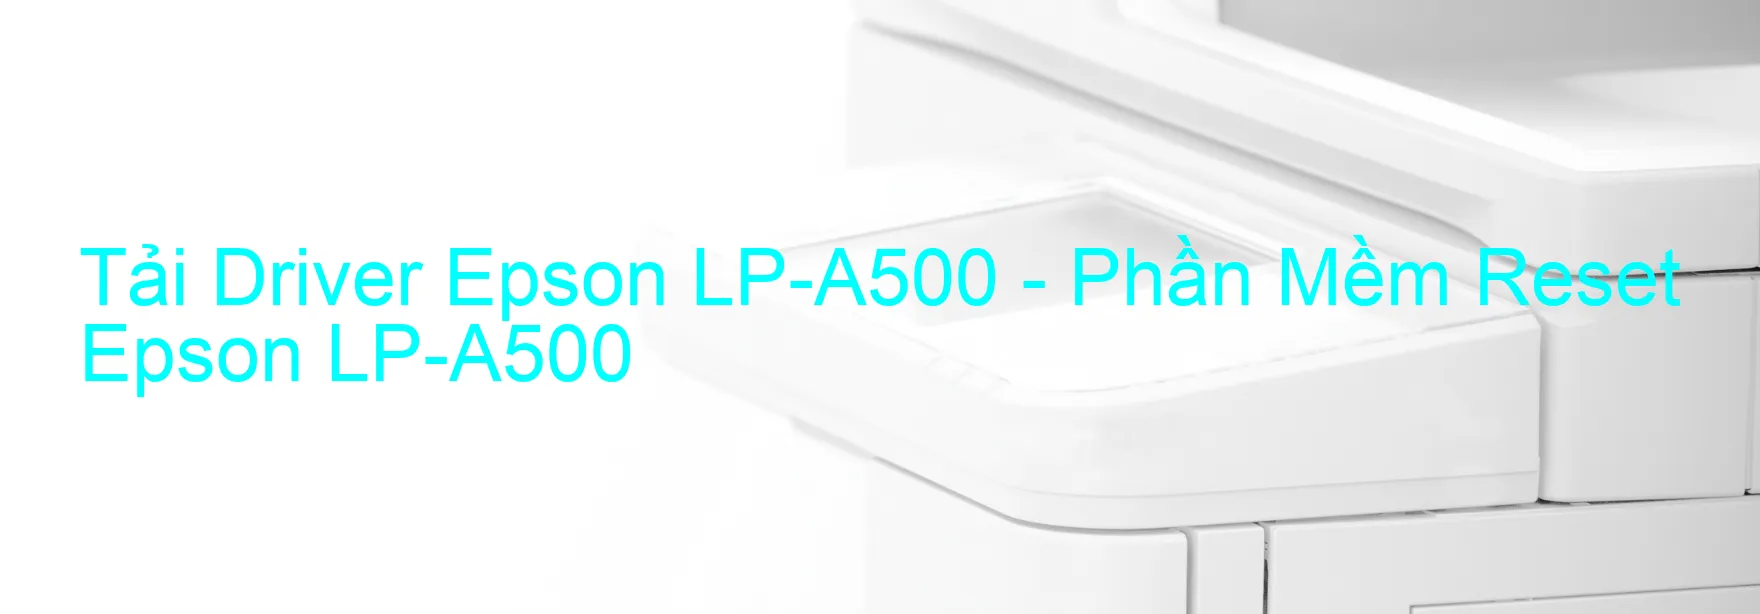 Driver Epson LP-A500, Phần Mềm Reset Epson LP-A500